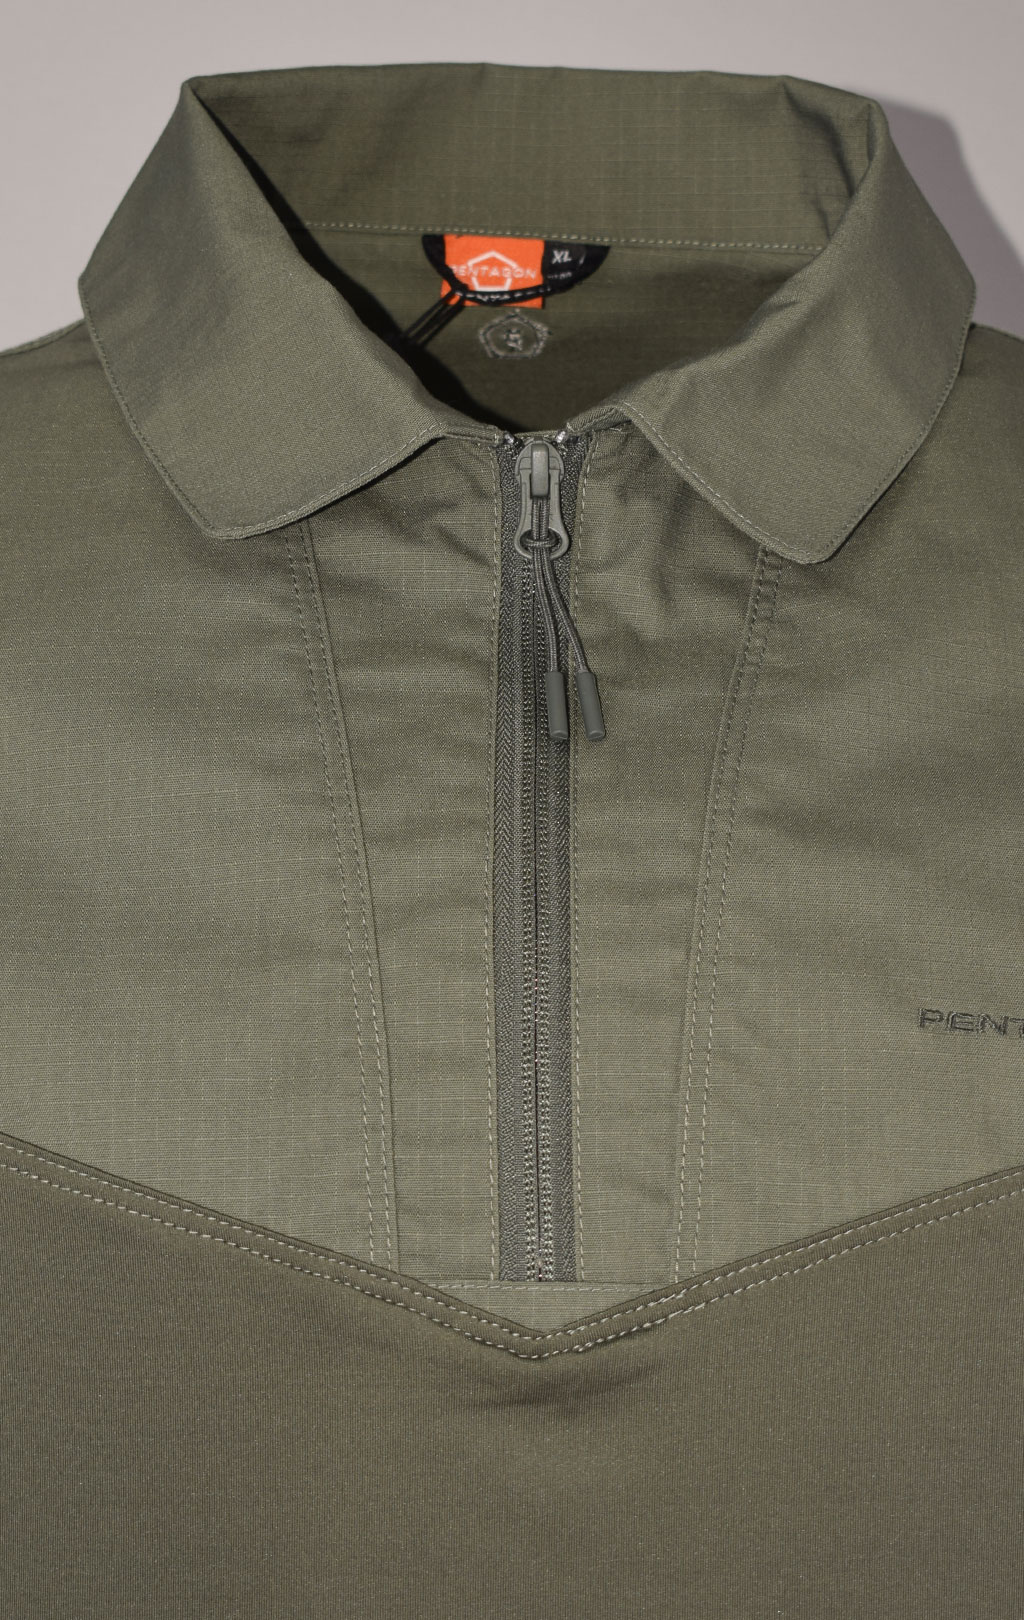 Рубашка Combat shirt Pentagon RANGER TAC-FRESH короткий рукав green 06CG 02013-SH 